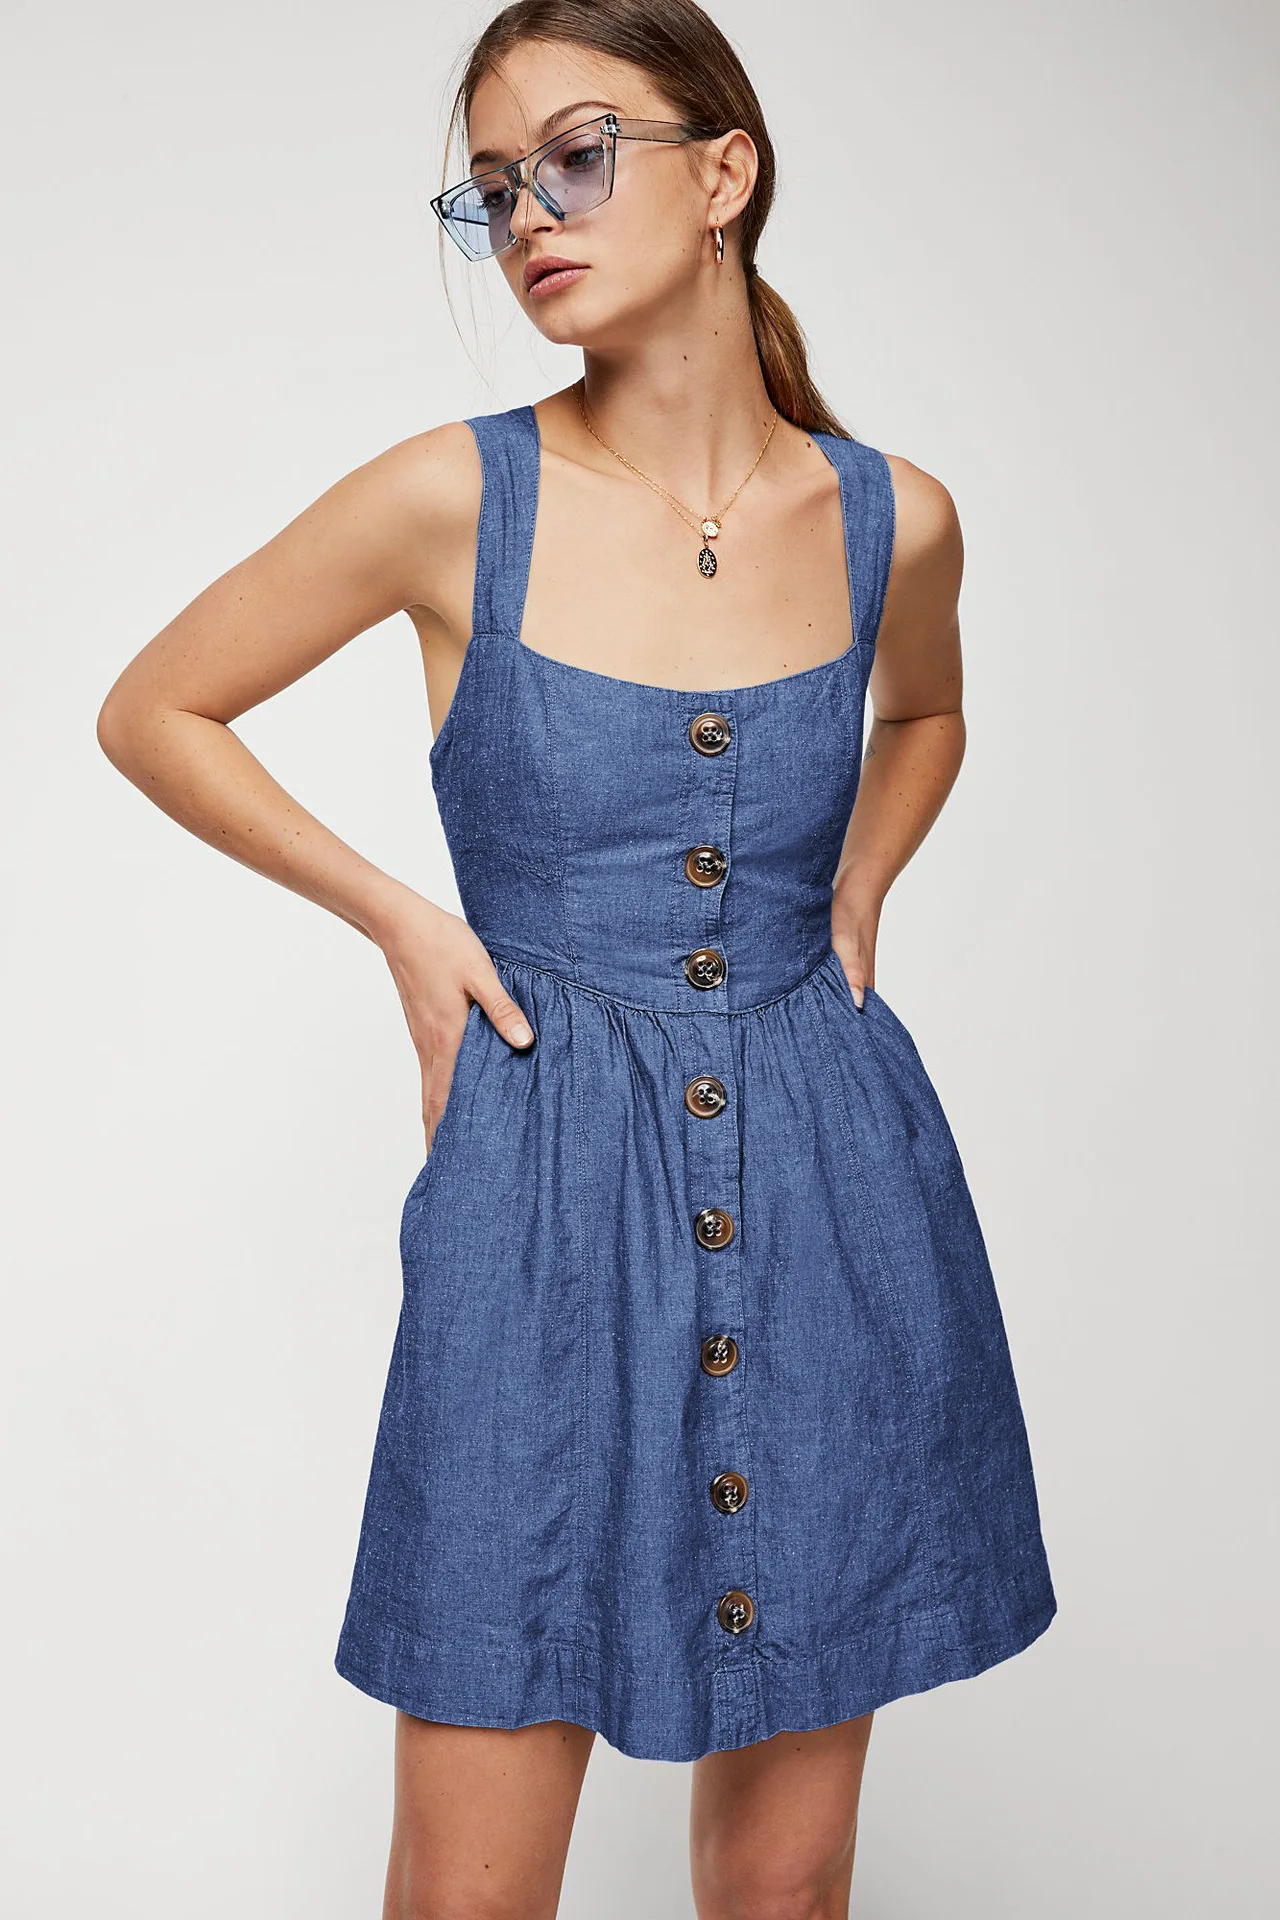 2018 women's fashion new summer dress hot sale sleeveless